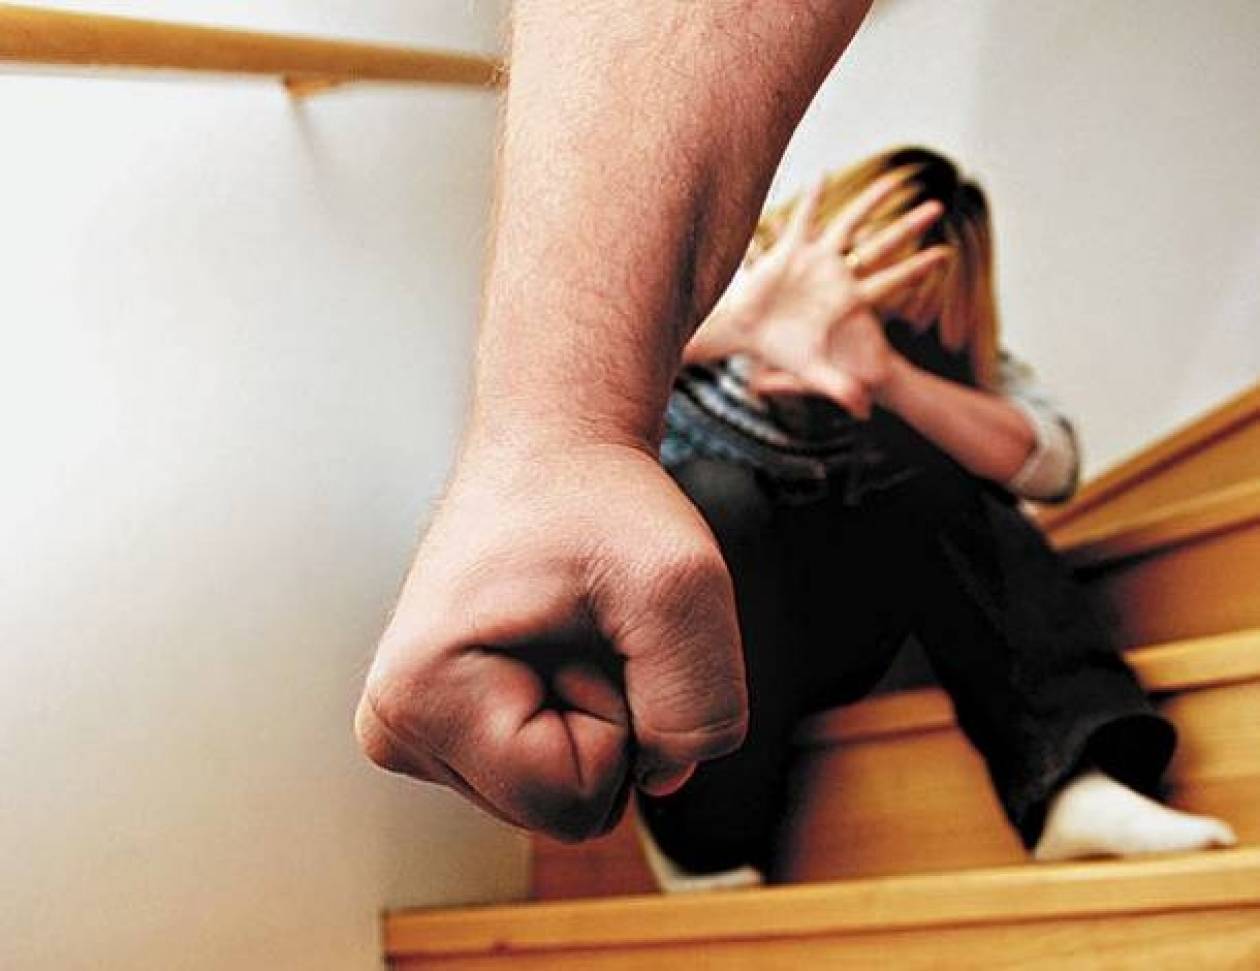 FRA: Mία στις τρεις γυναίκες στην ΕΕ έχει πέσει θύμα κακοποίησης